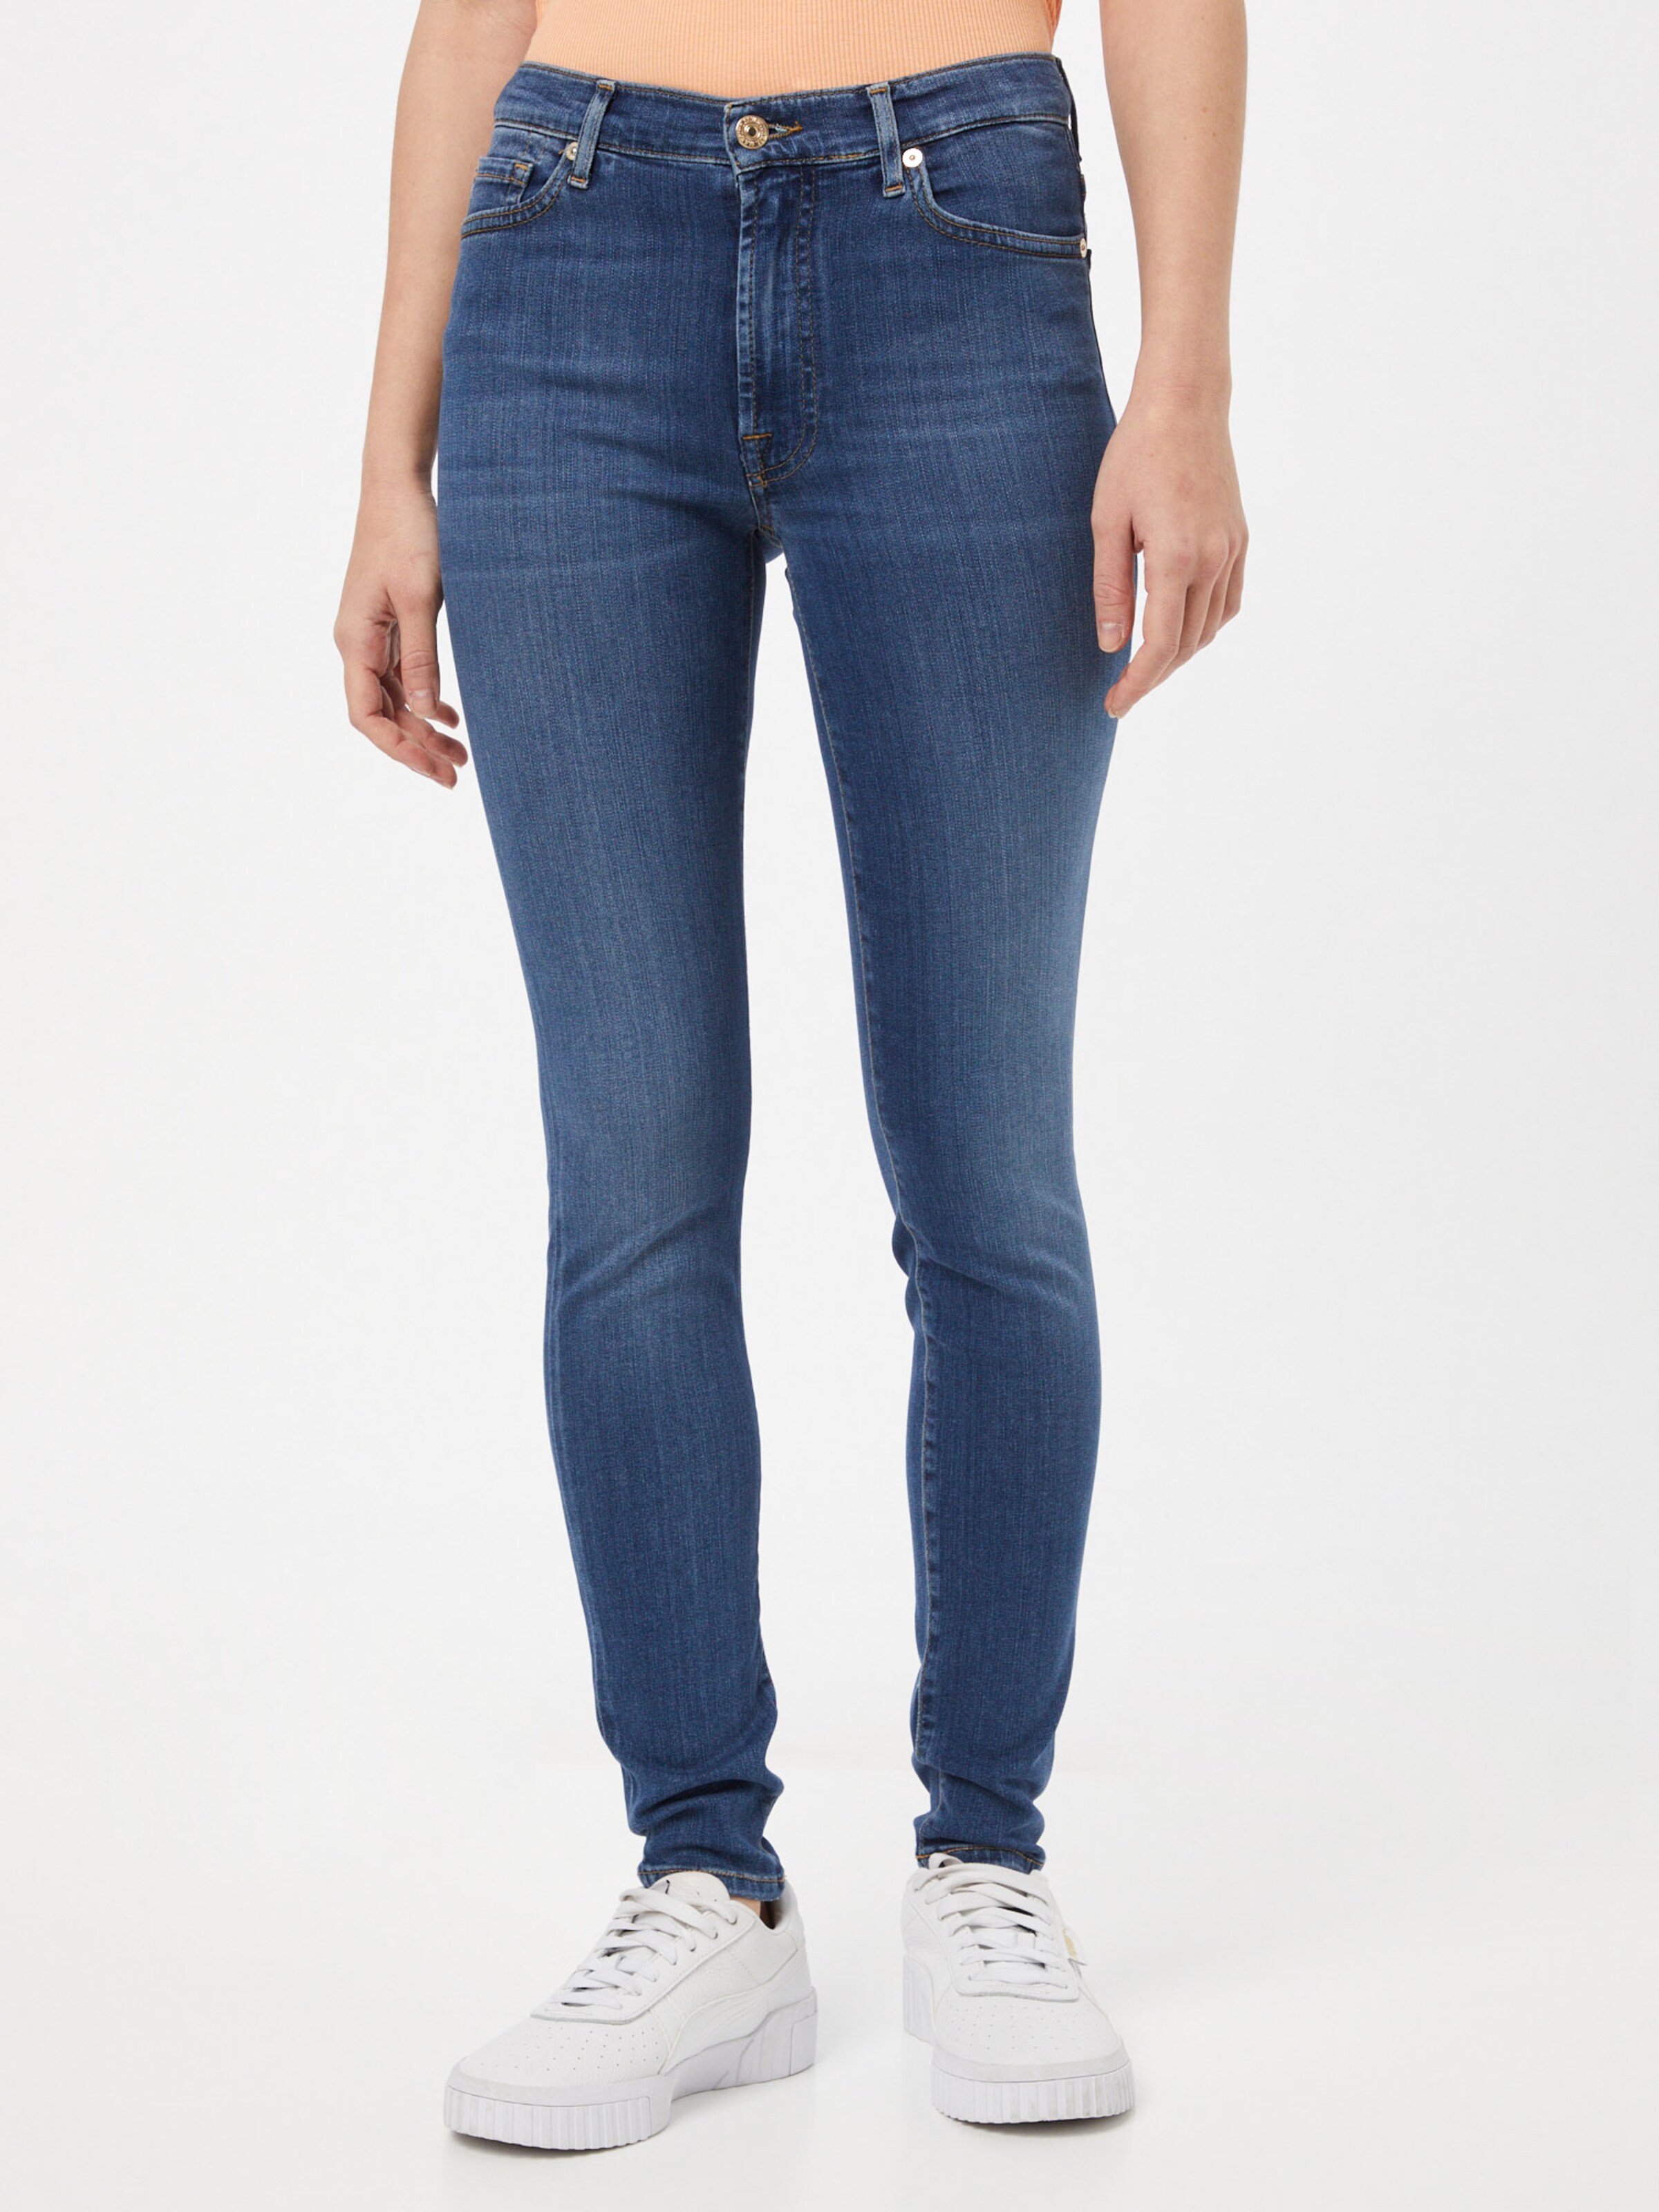 Jeans MILE HIGH SUPER SKINNY ABOUT YOU Donna Abbigliamento Pantaloni e jeans Jeans Jeans skinny 